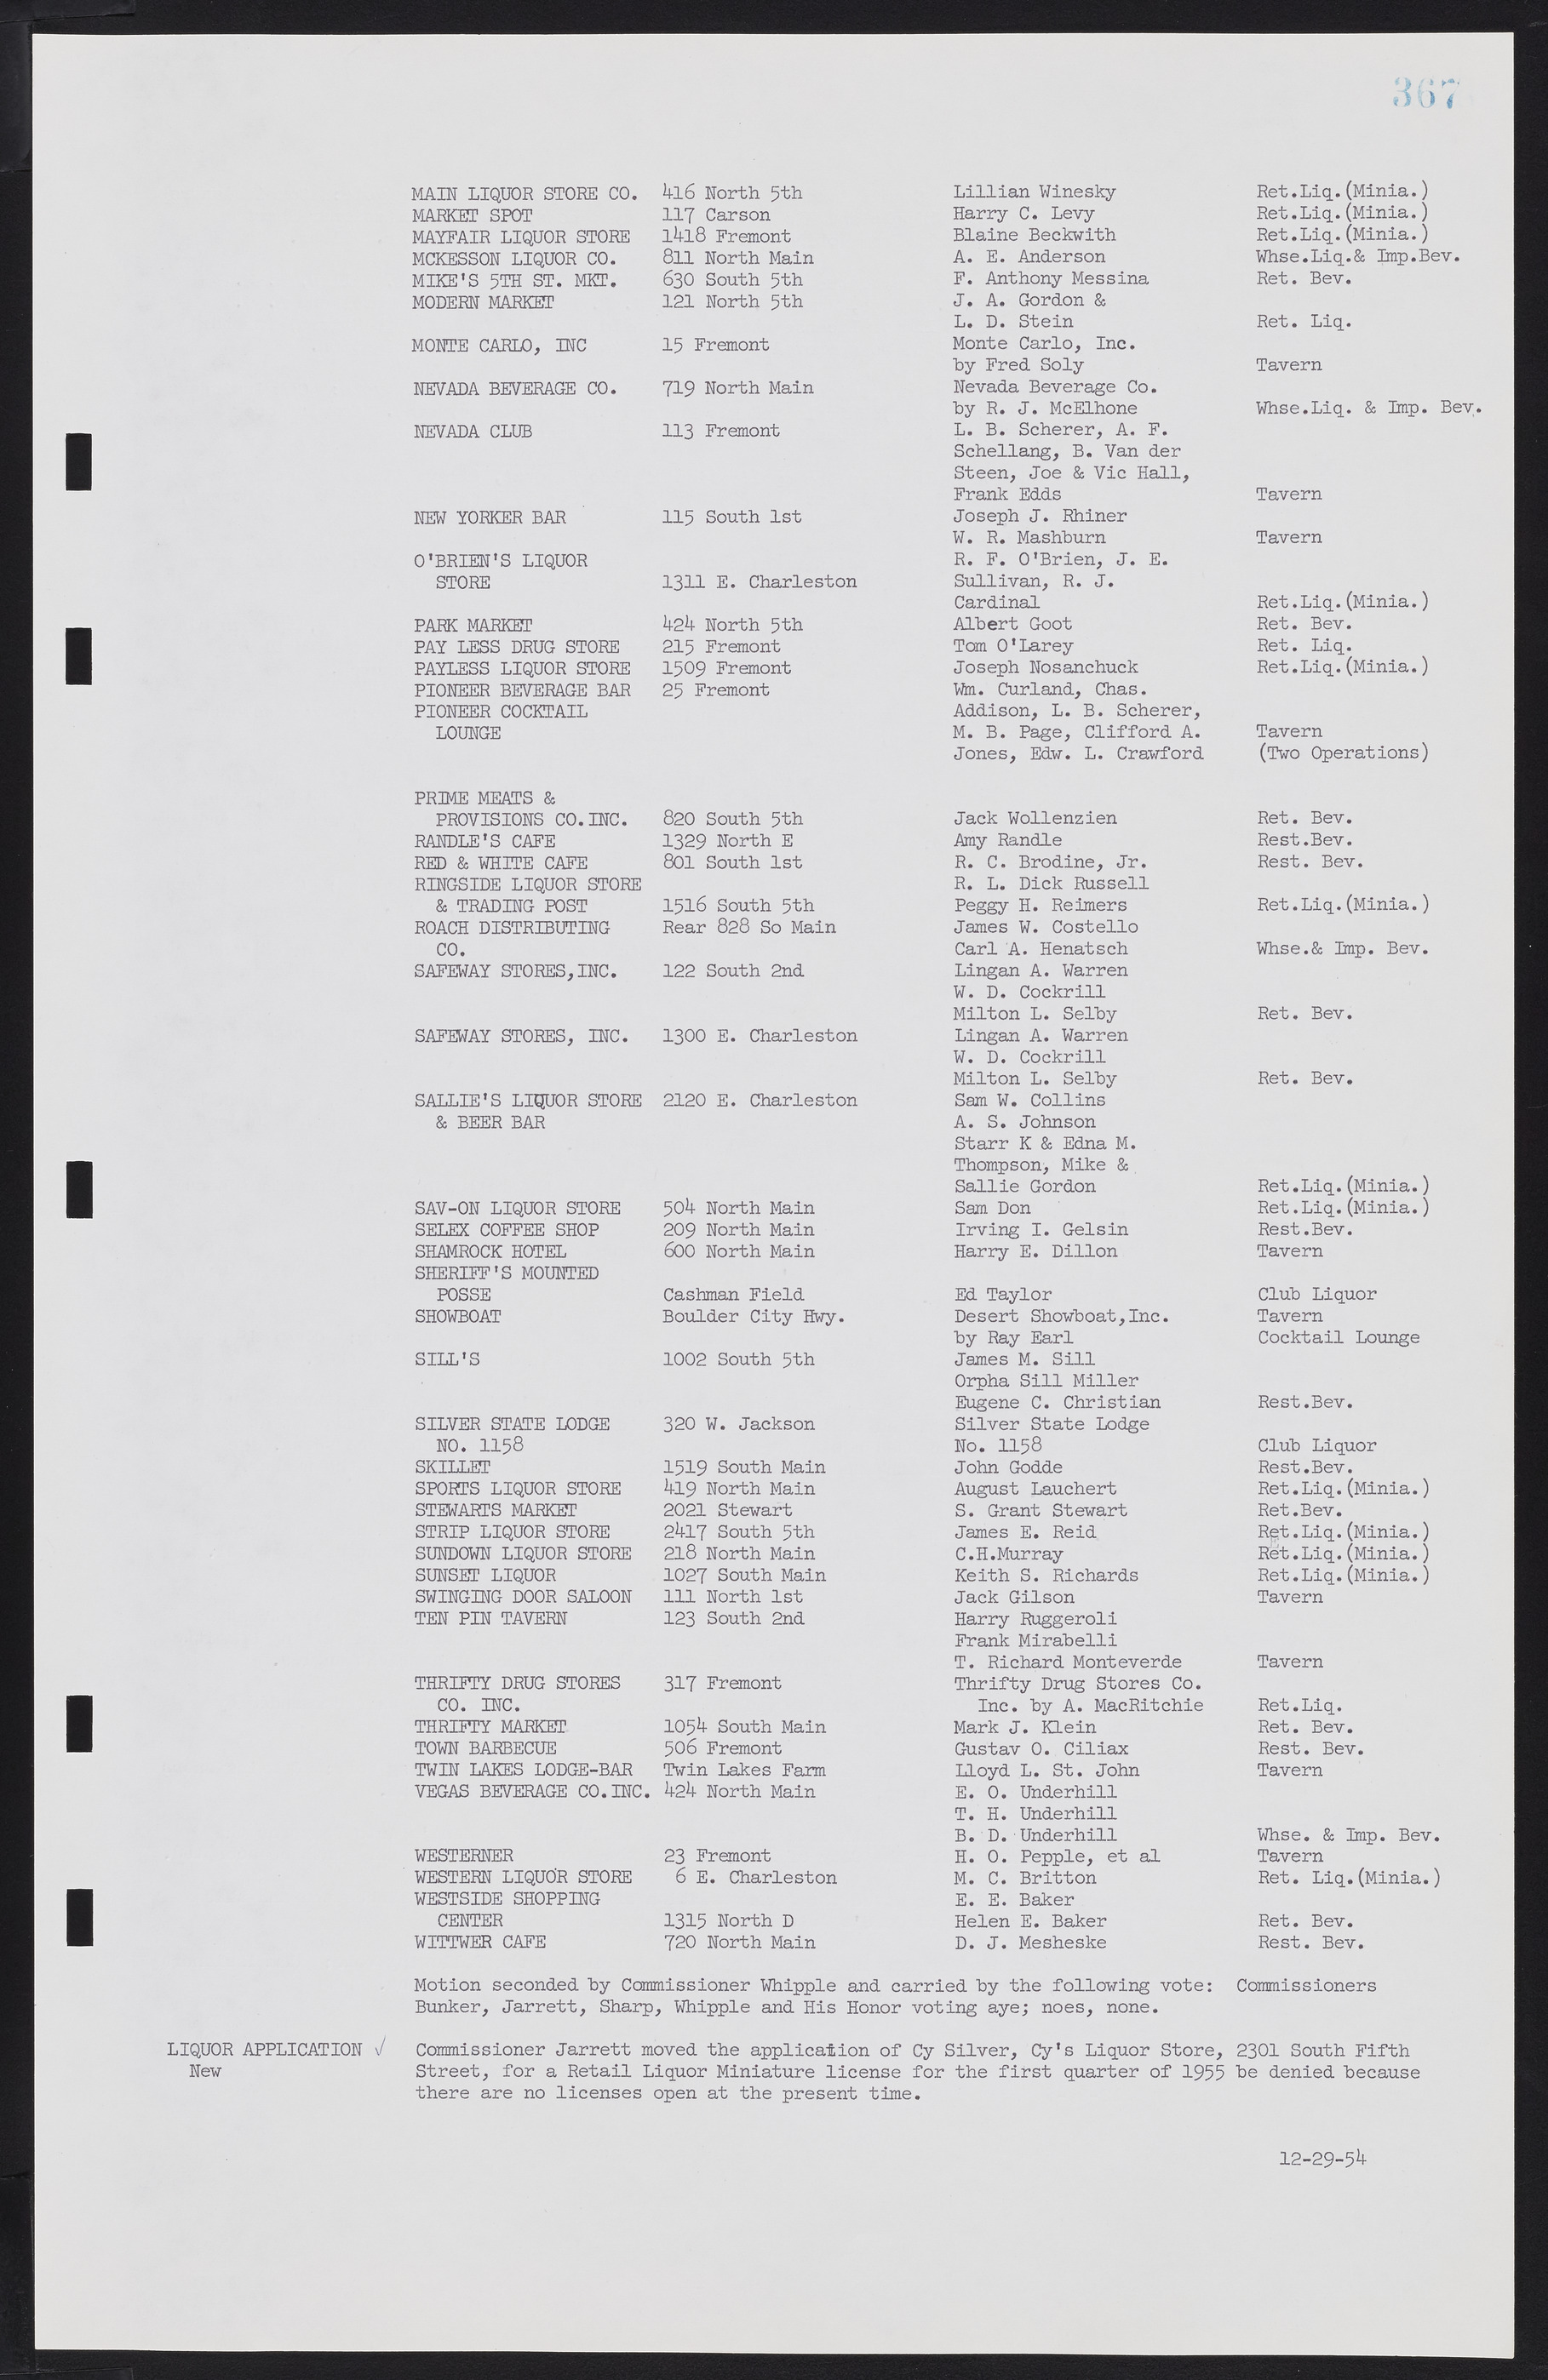 Las Vegas City Commission Minutes, February 17, 1954 to September 21, 1955, lvc000009-373